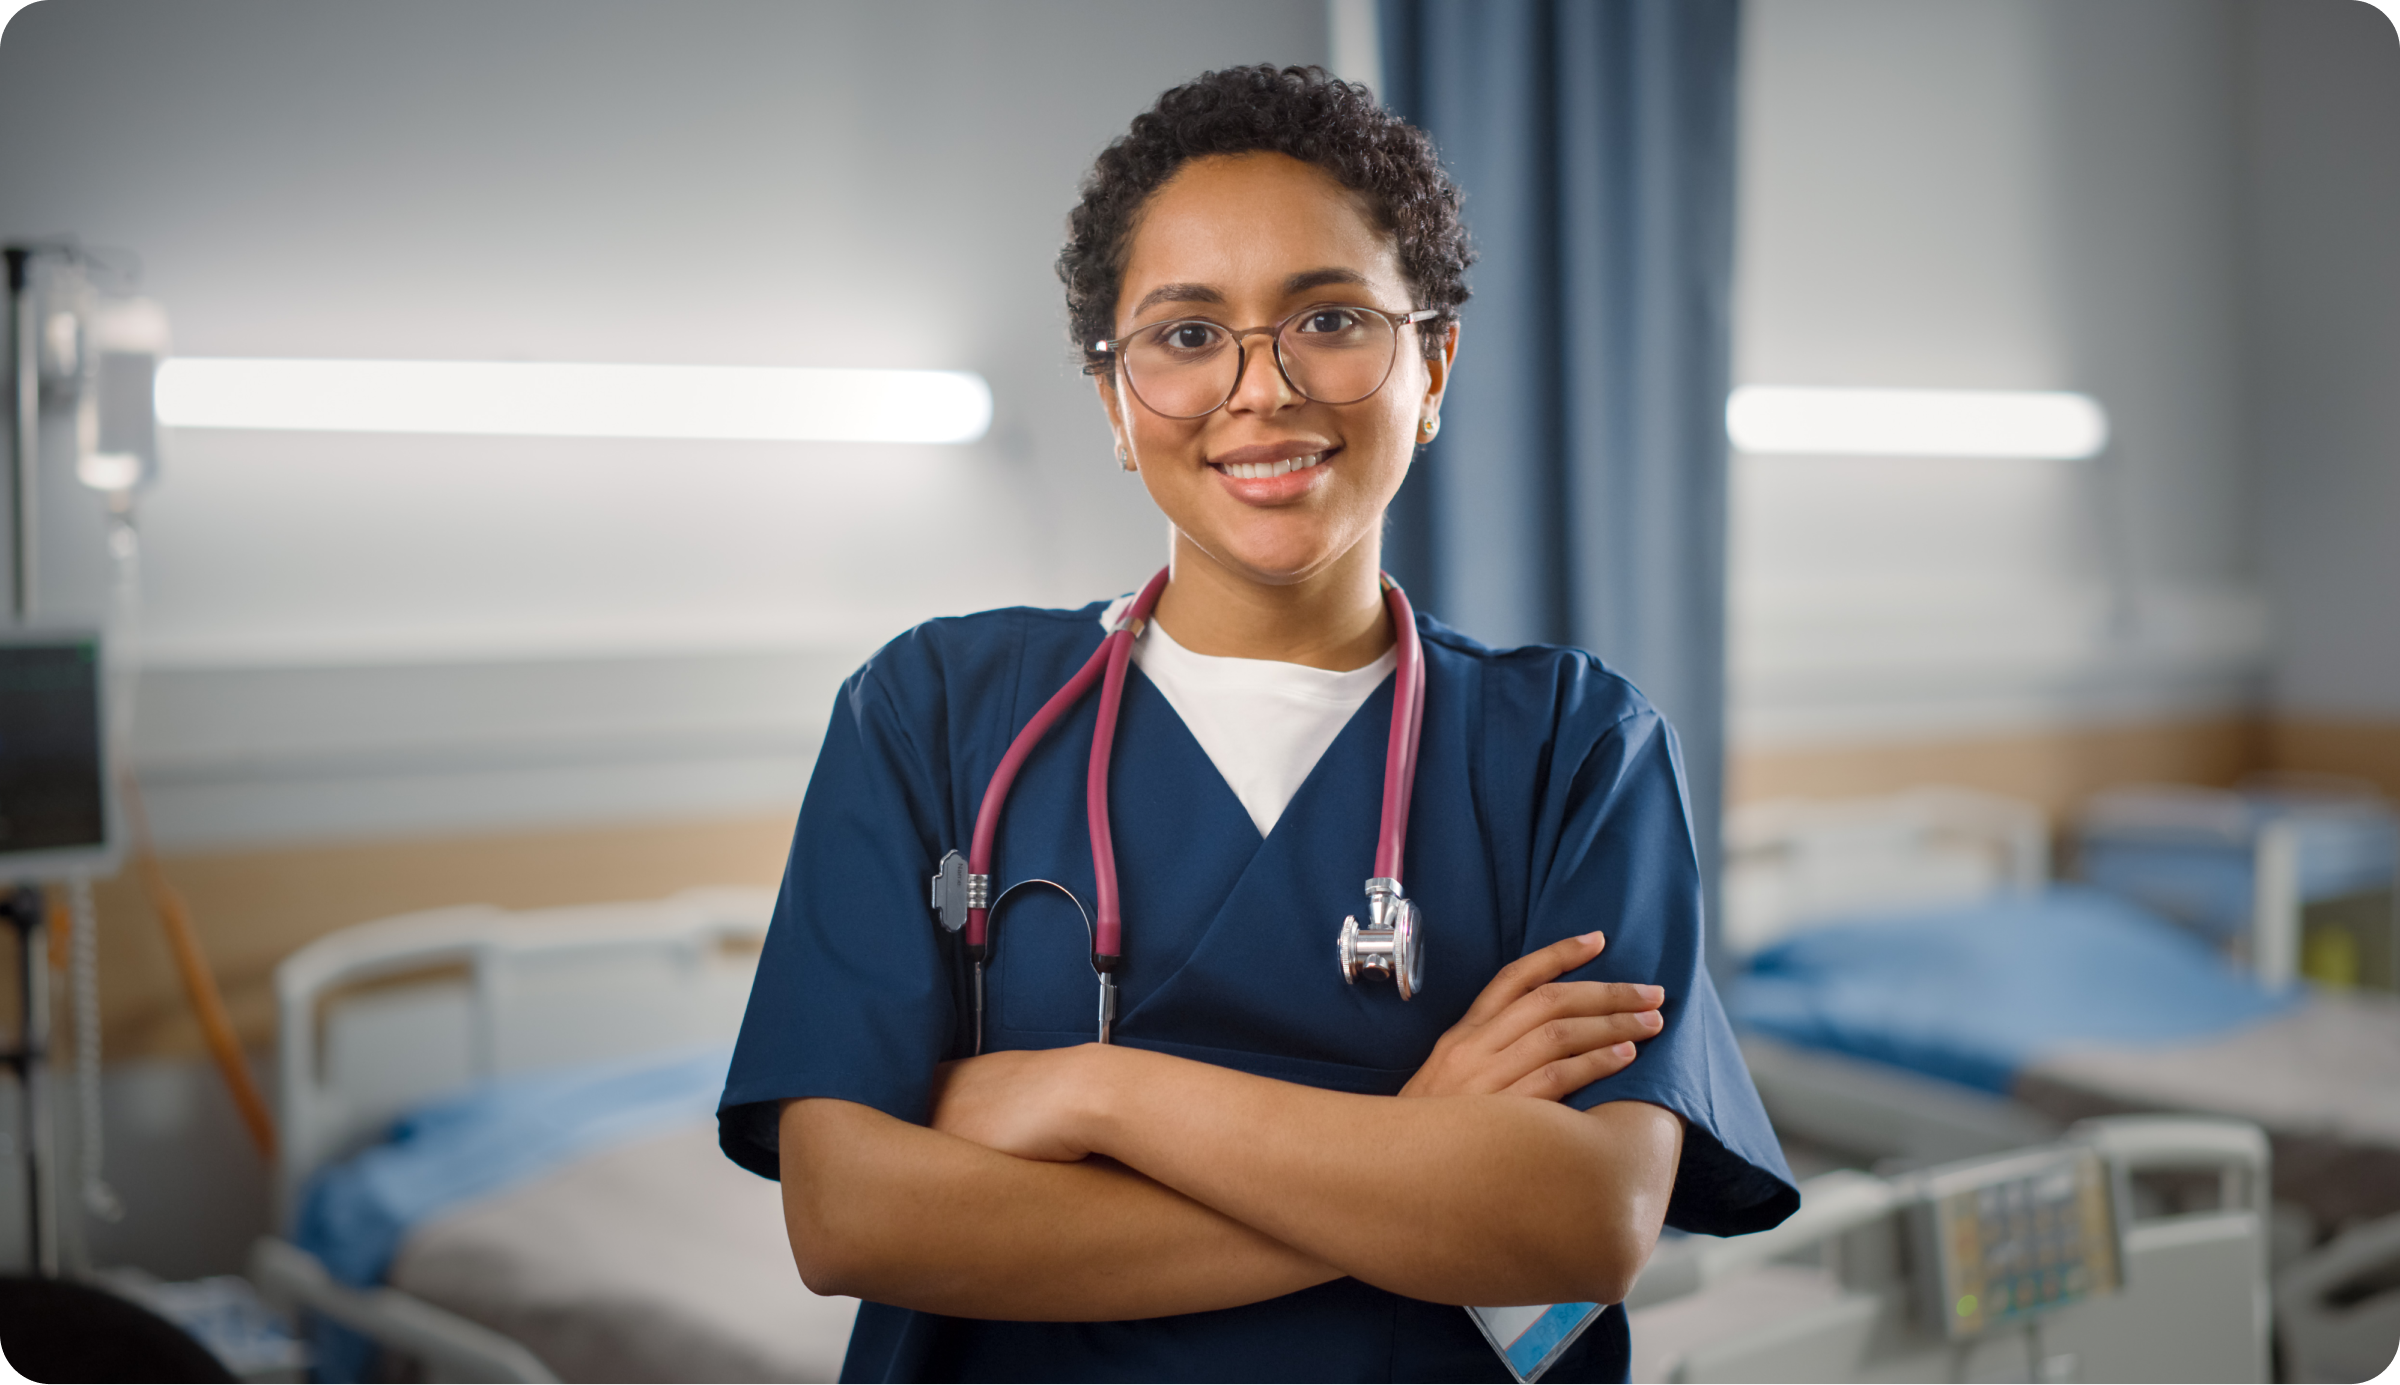 Video Assessment & Nursing Education: Raising the Bar for First-Year Nurses